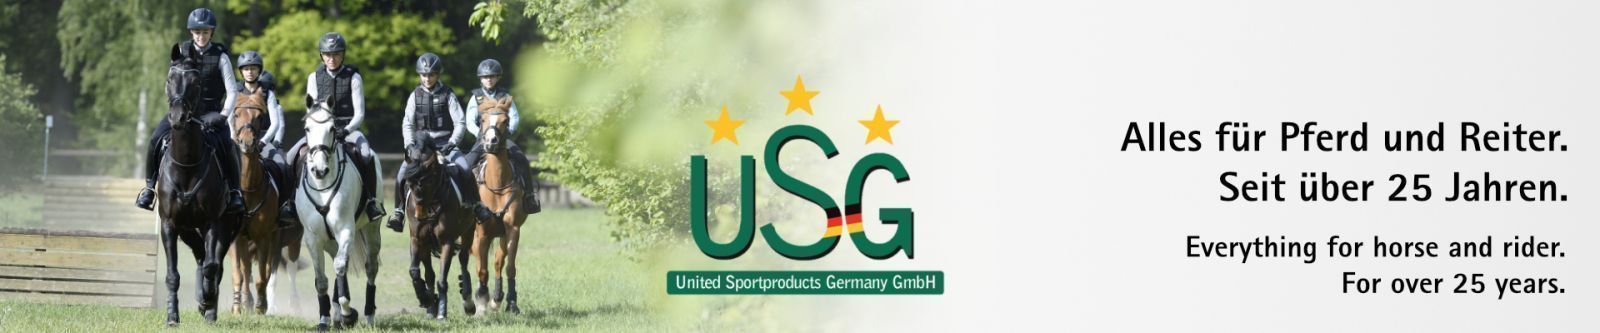 Maßtabellen - USG - United Sportproducts Germany GmbH